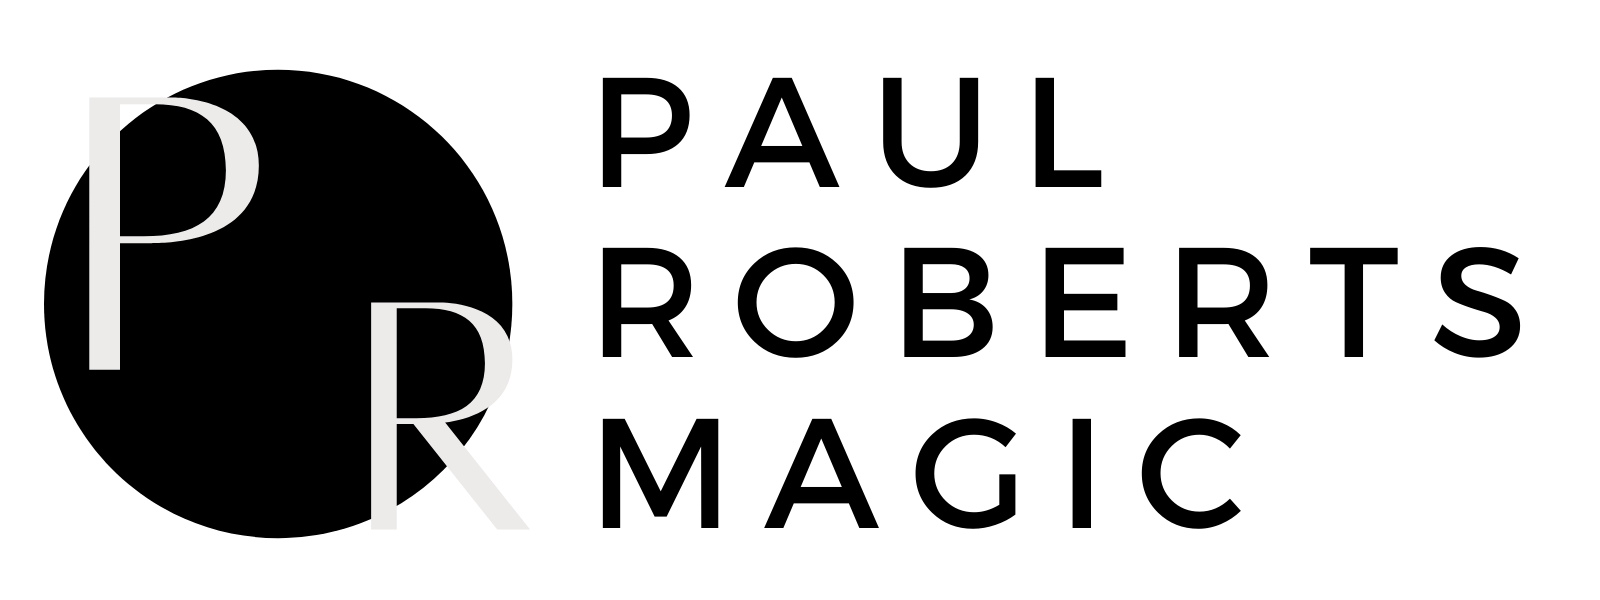 Paul Roberts Magic